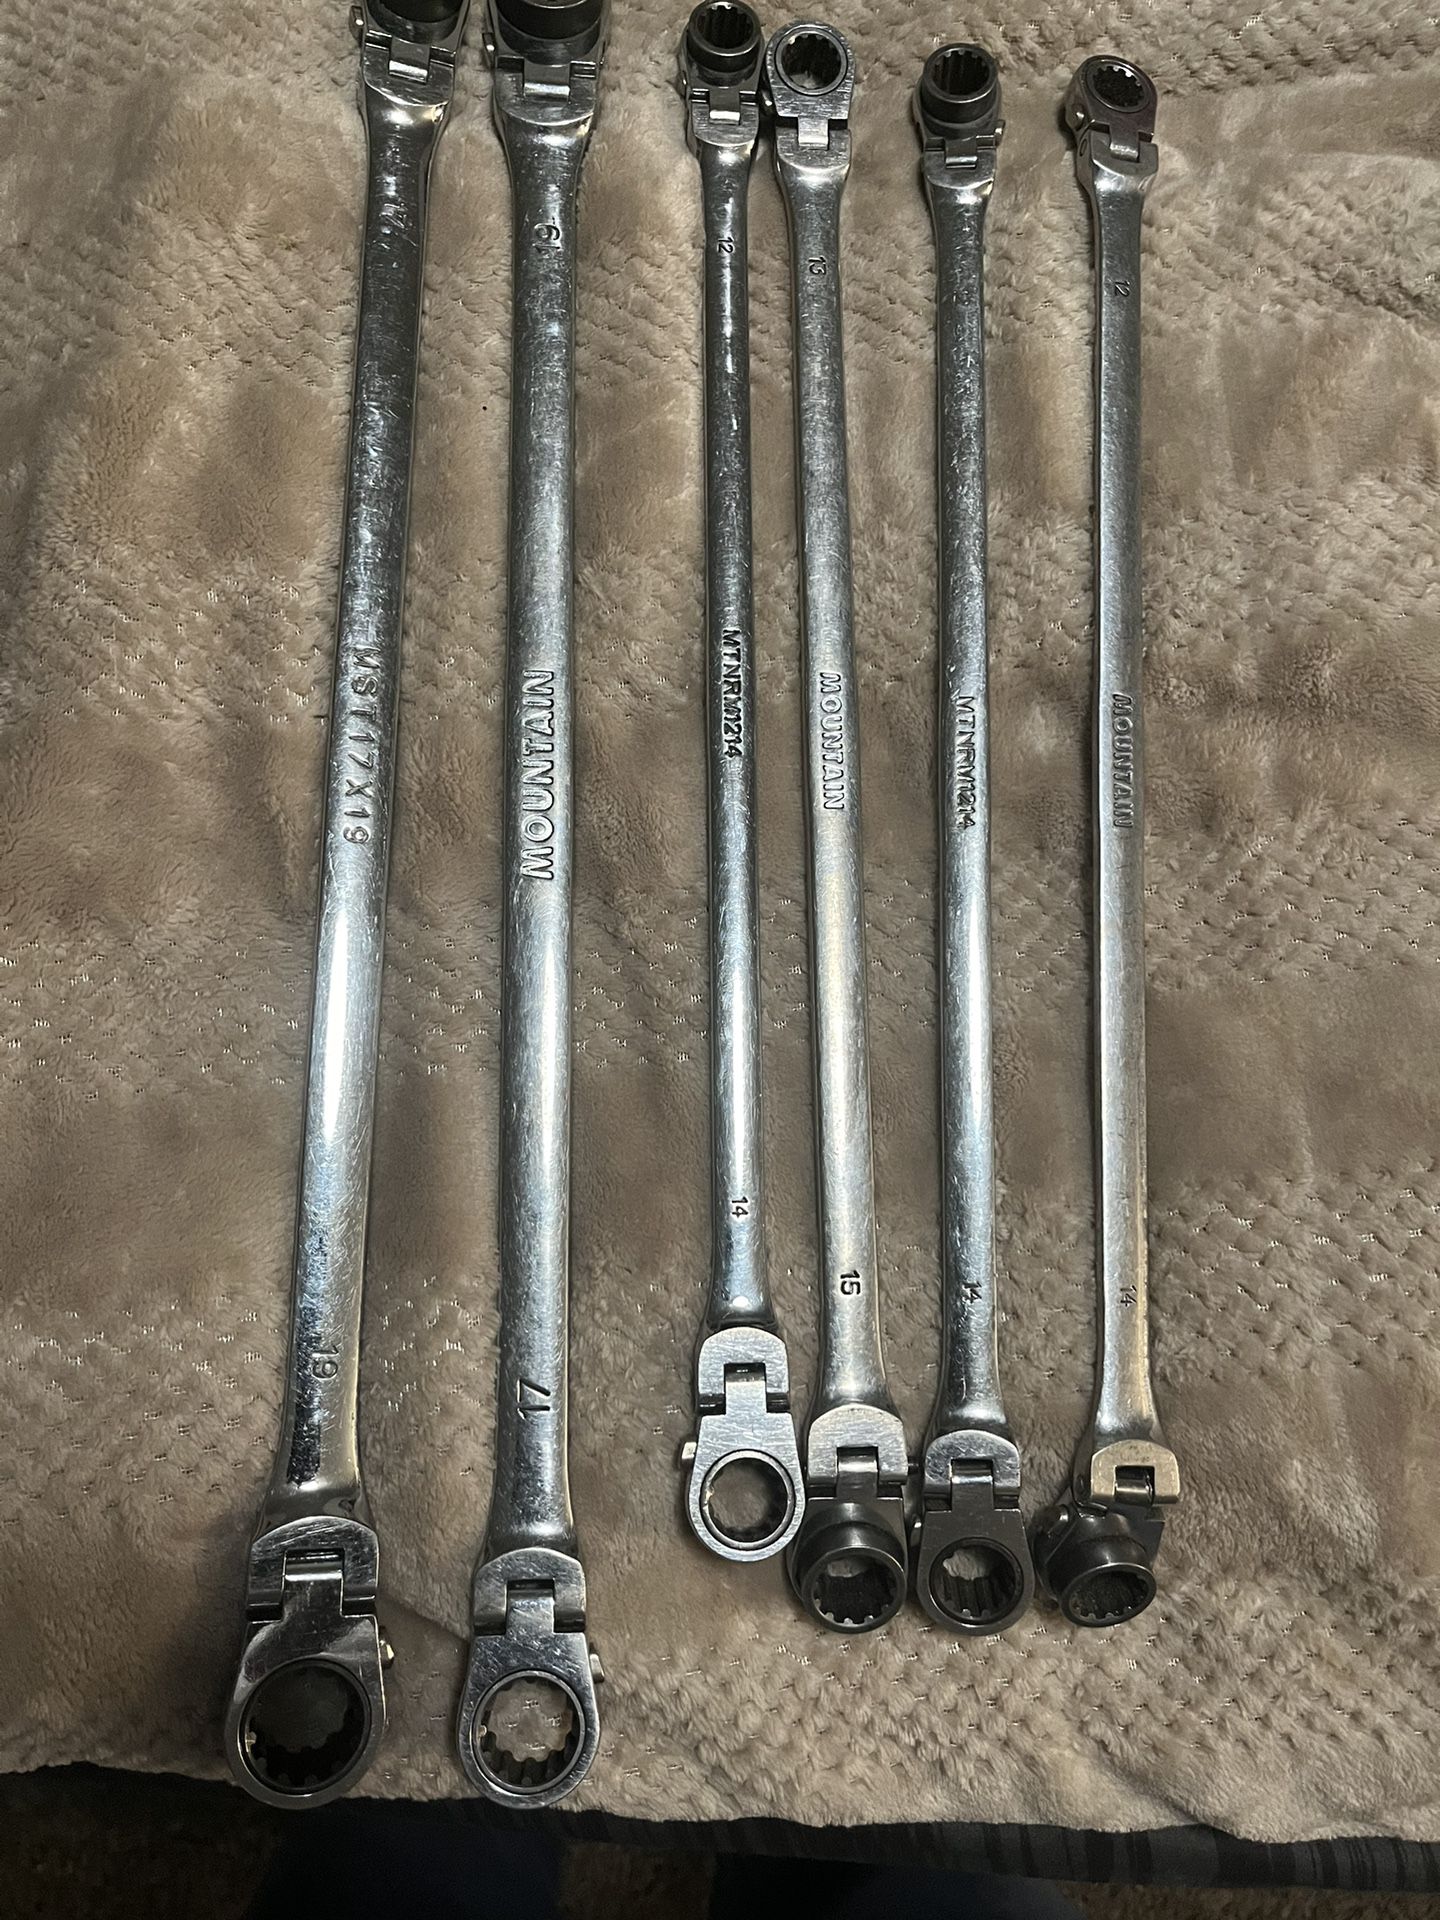 5 Piece Flex Long Ratchet Wrench Set